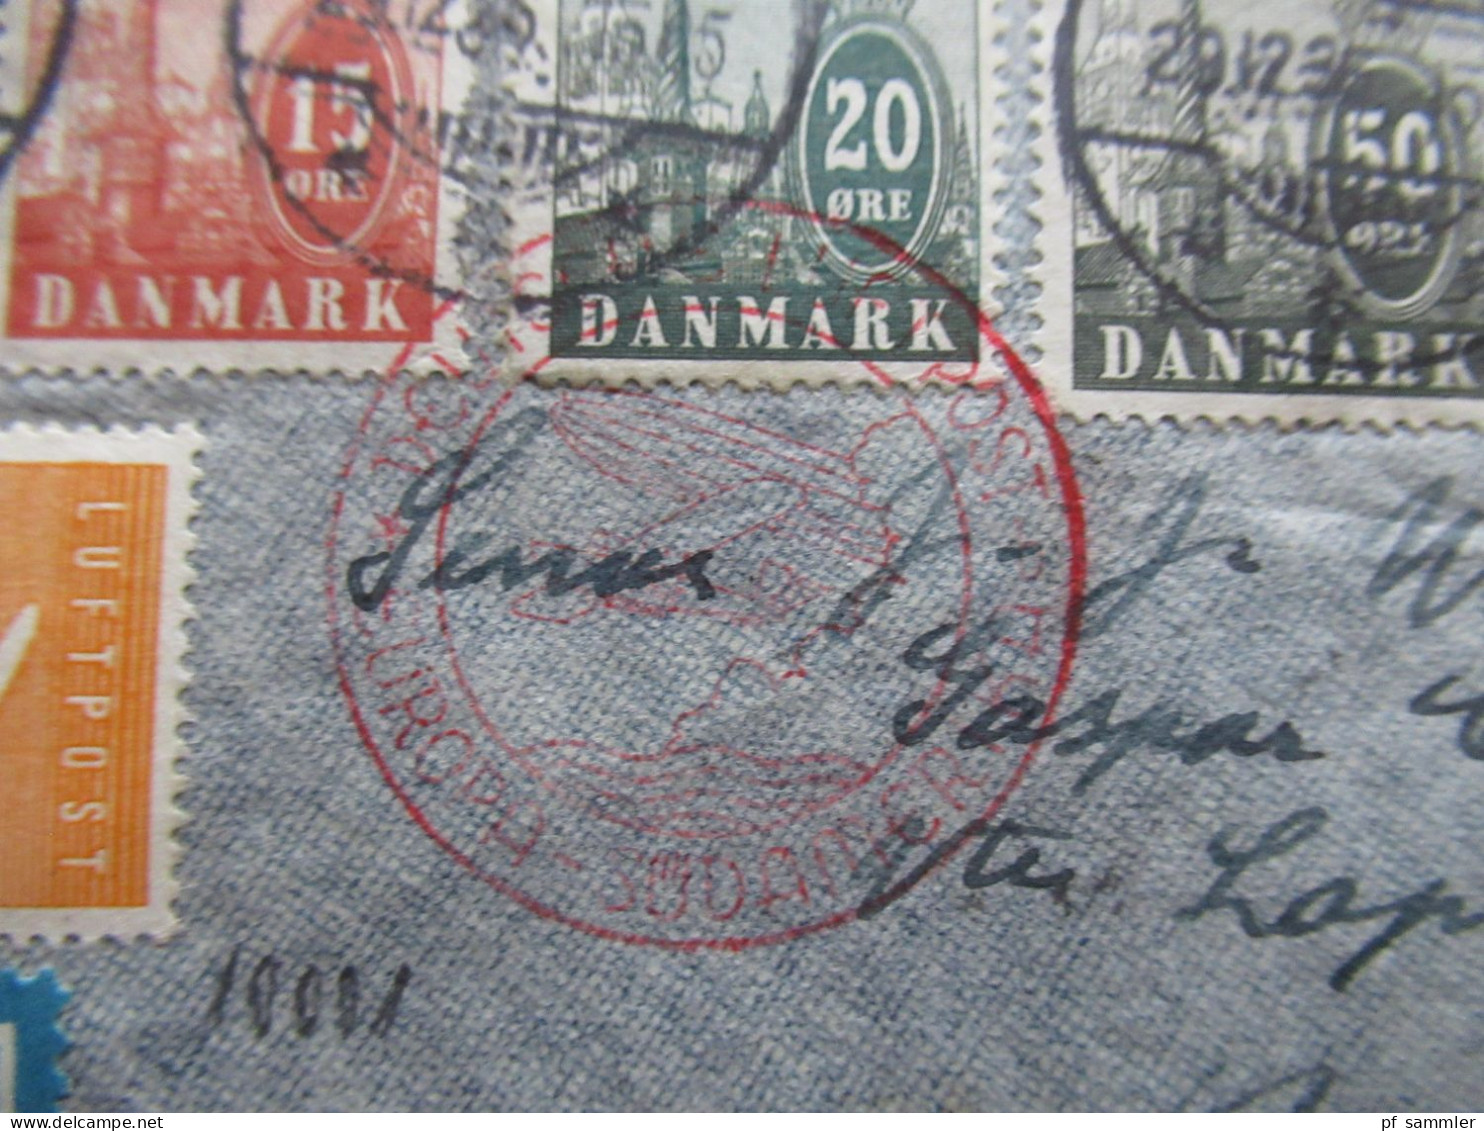 Dänemark 29.12.1936 Zeppelin Südamerikafahrt Odense - Buenos Aires Bahnpost Berlin - Warnemünde Flugpostmarken 1934 - Covers & Documents